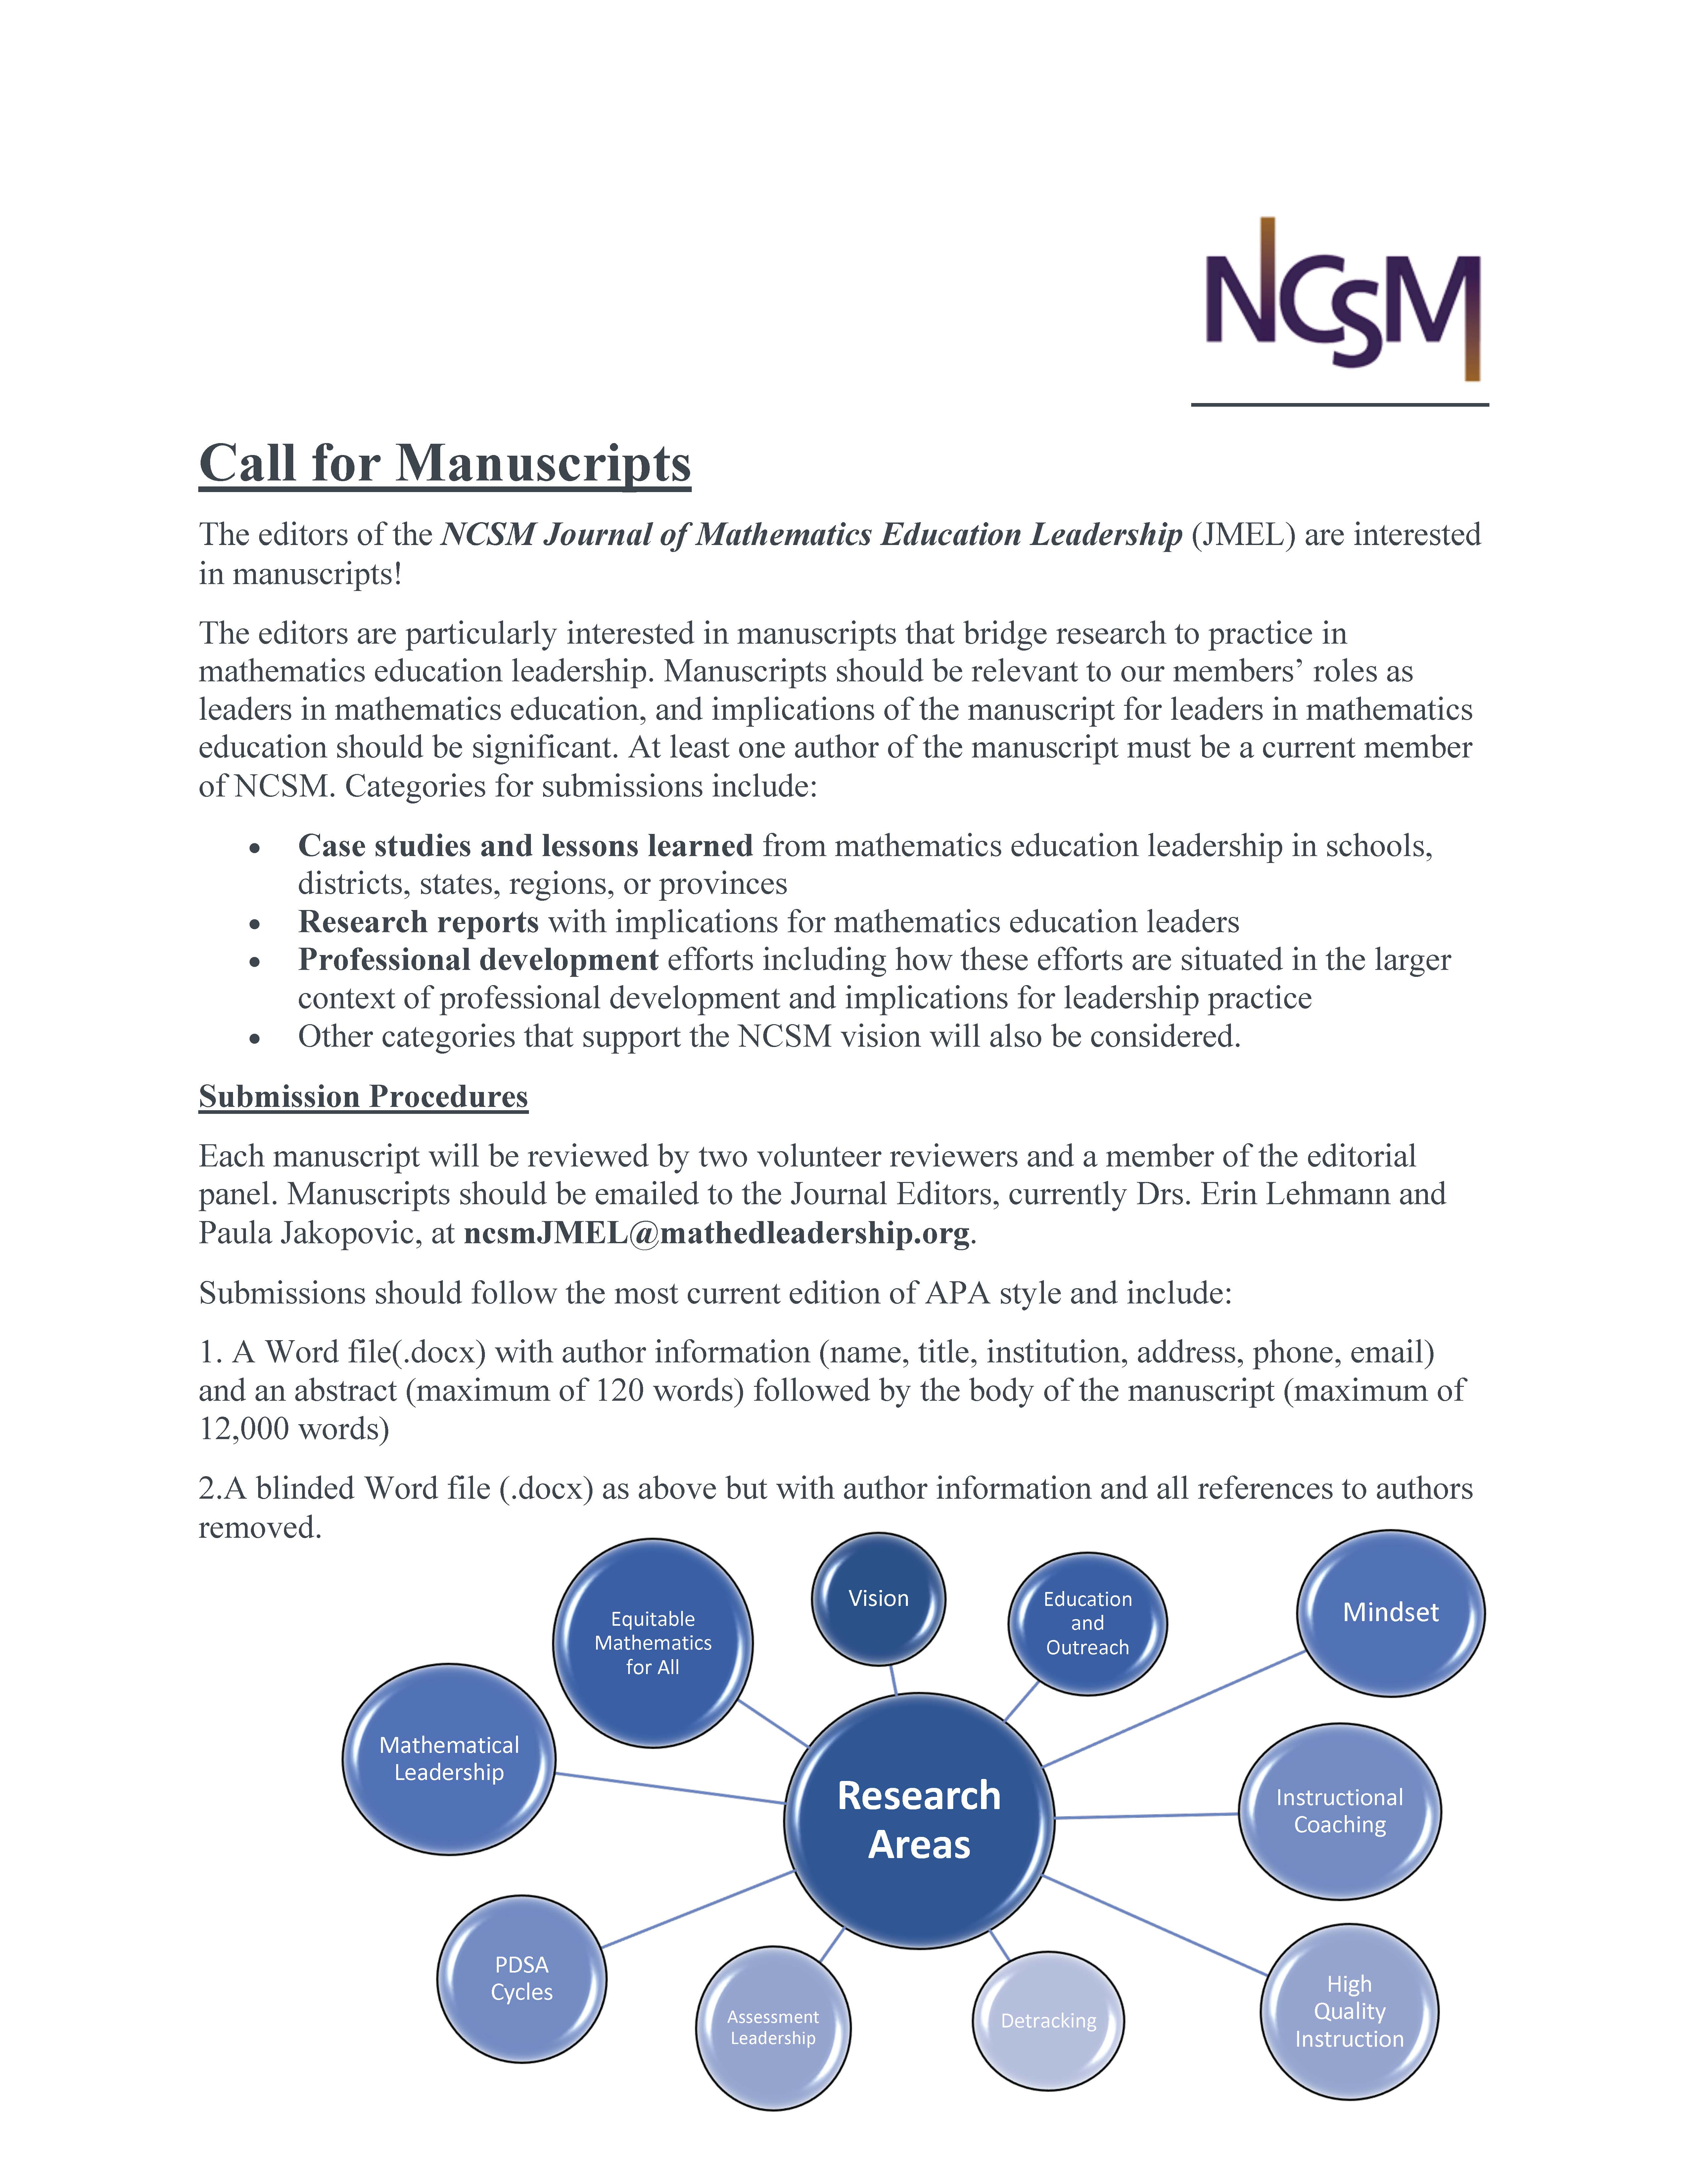 NCSM Journal of Mathematics Education Leadership (JMEL)